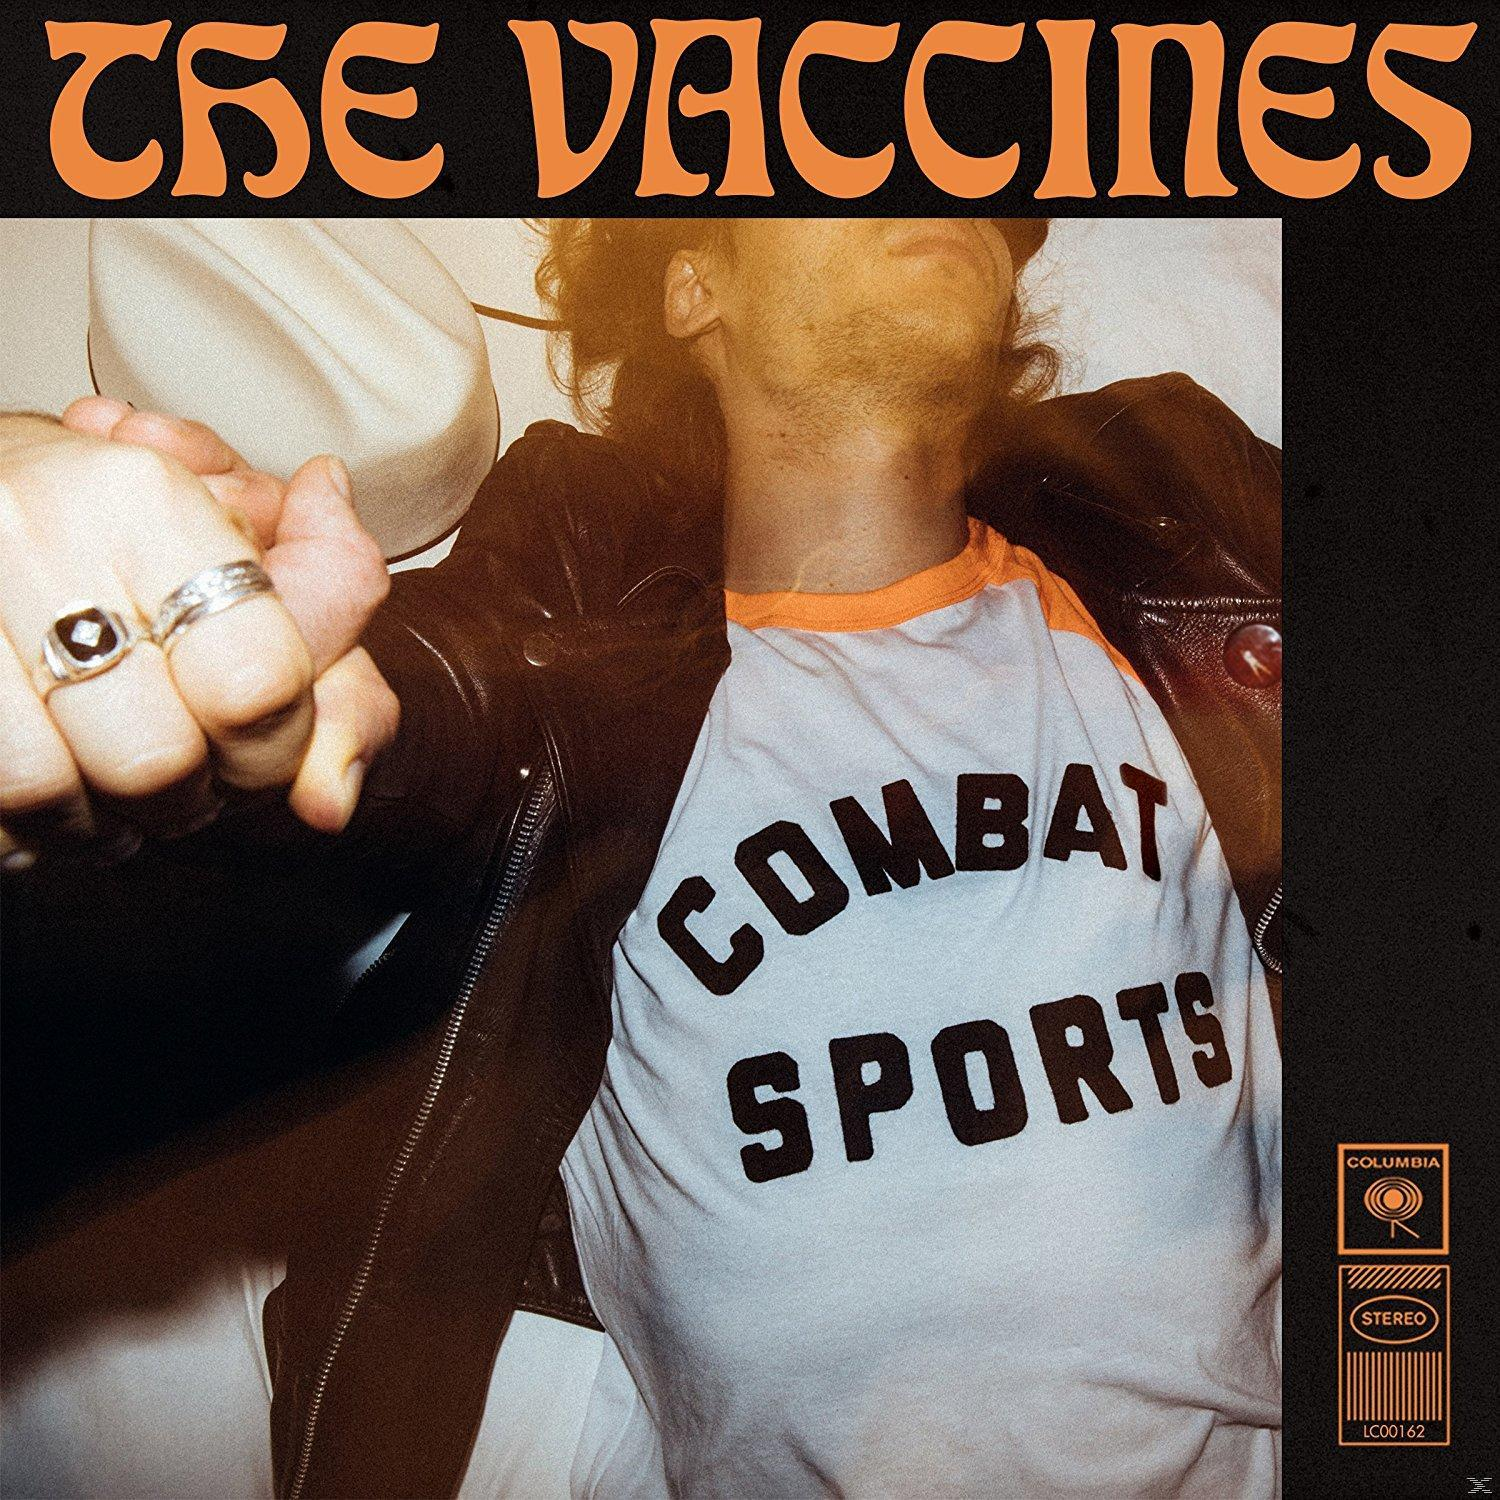 (Vinyl) VACCINES COMBAT - - SPORTS